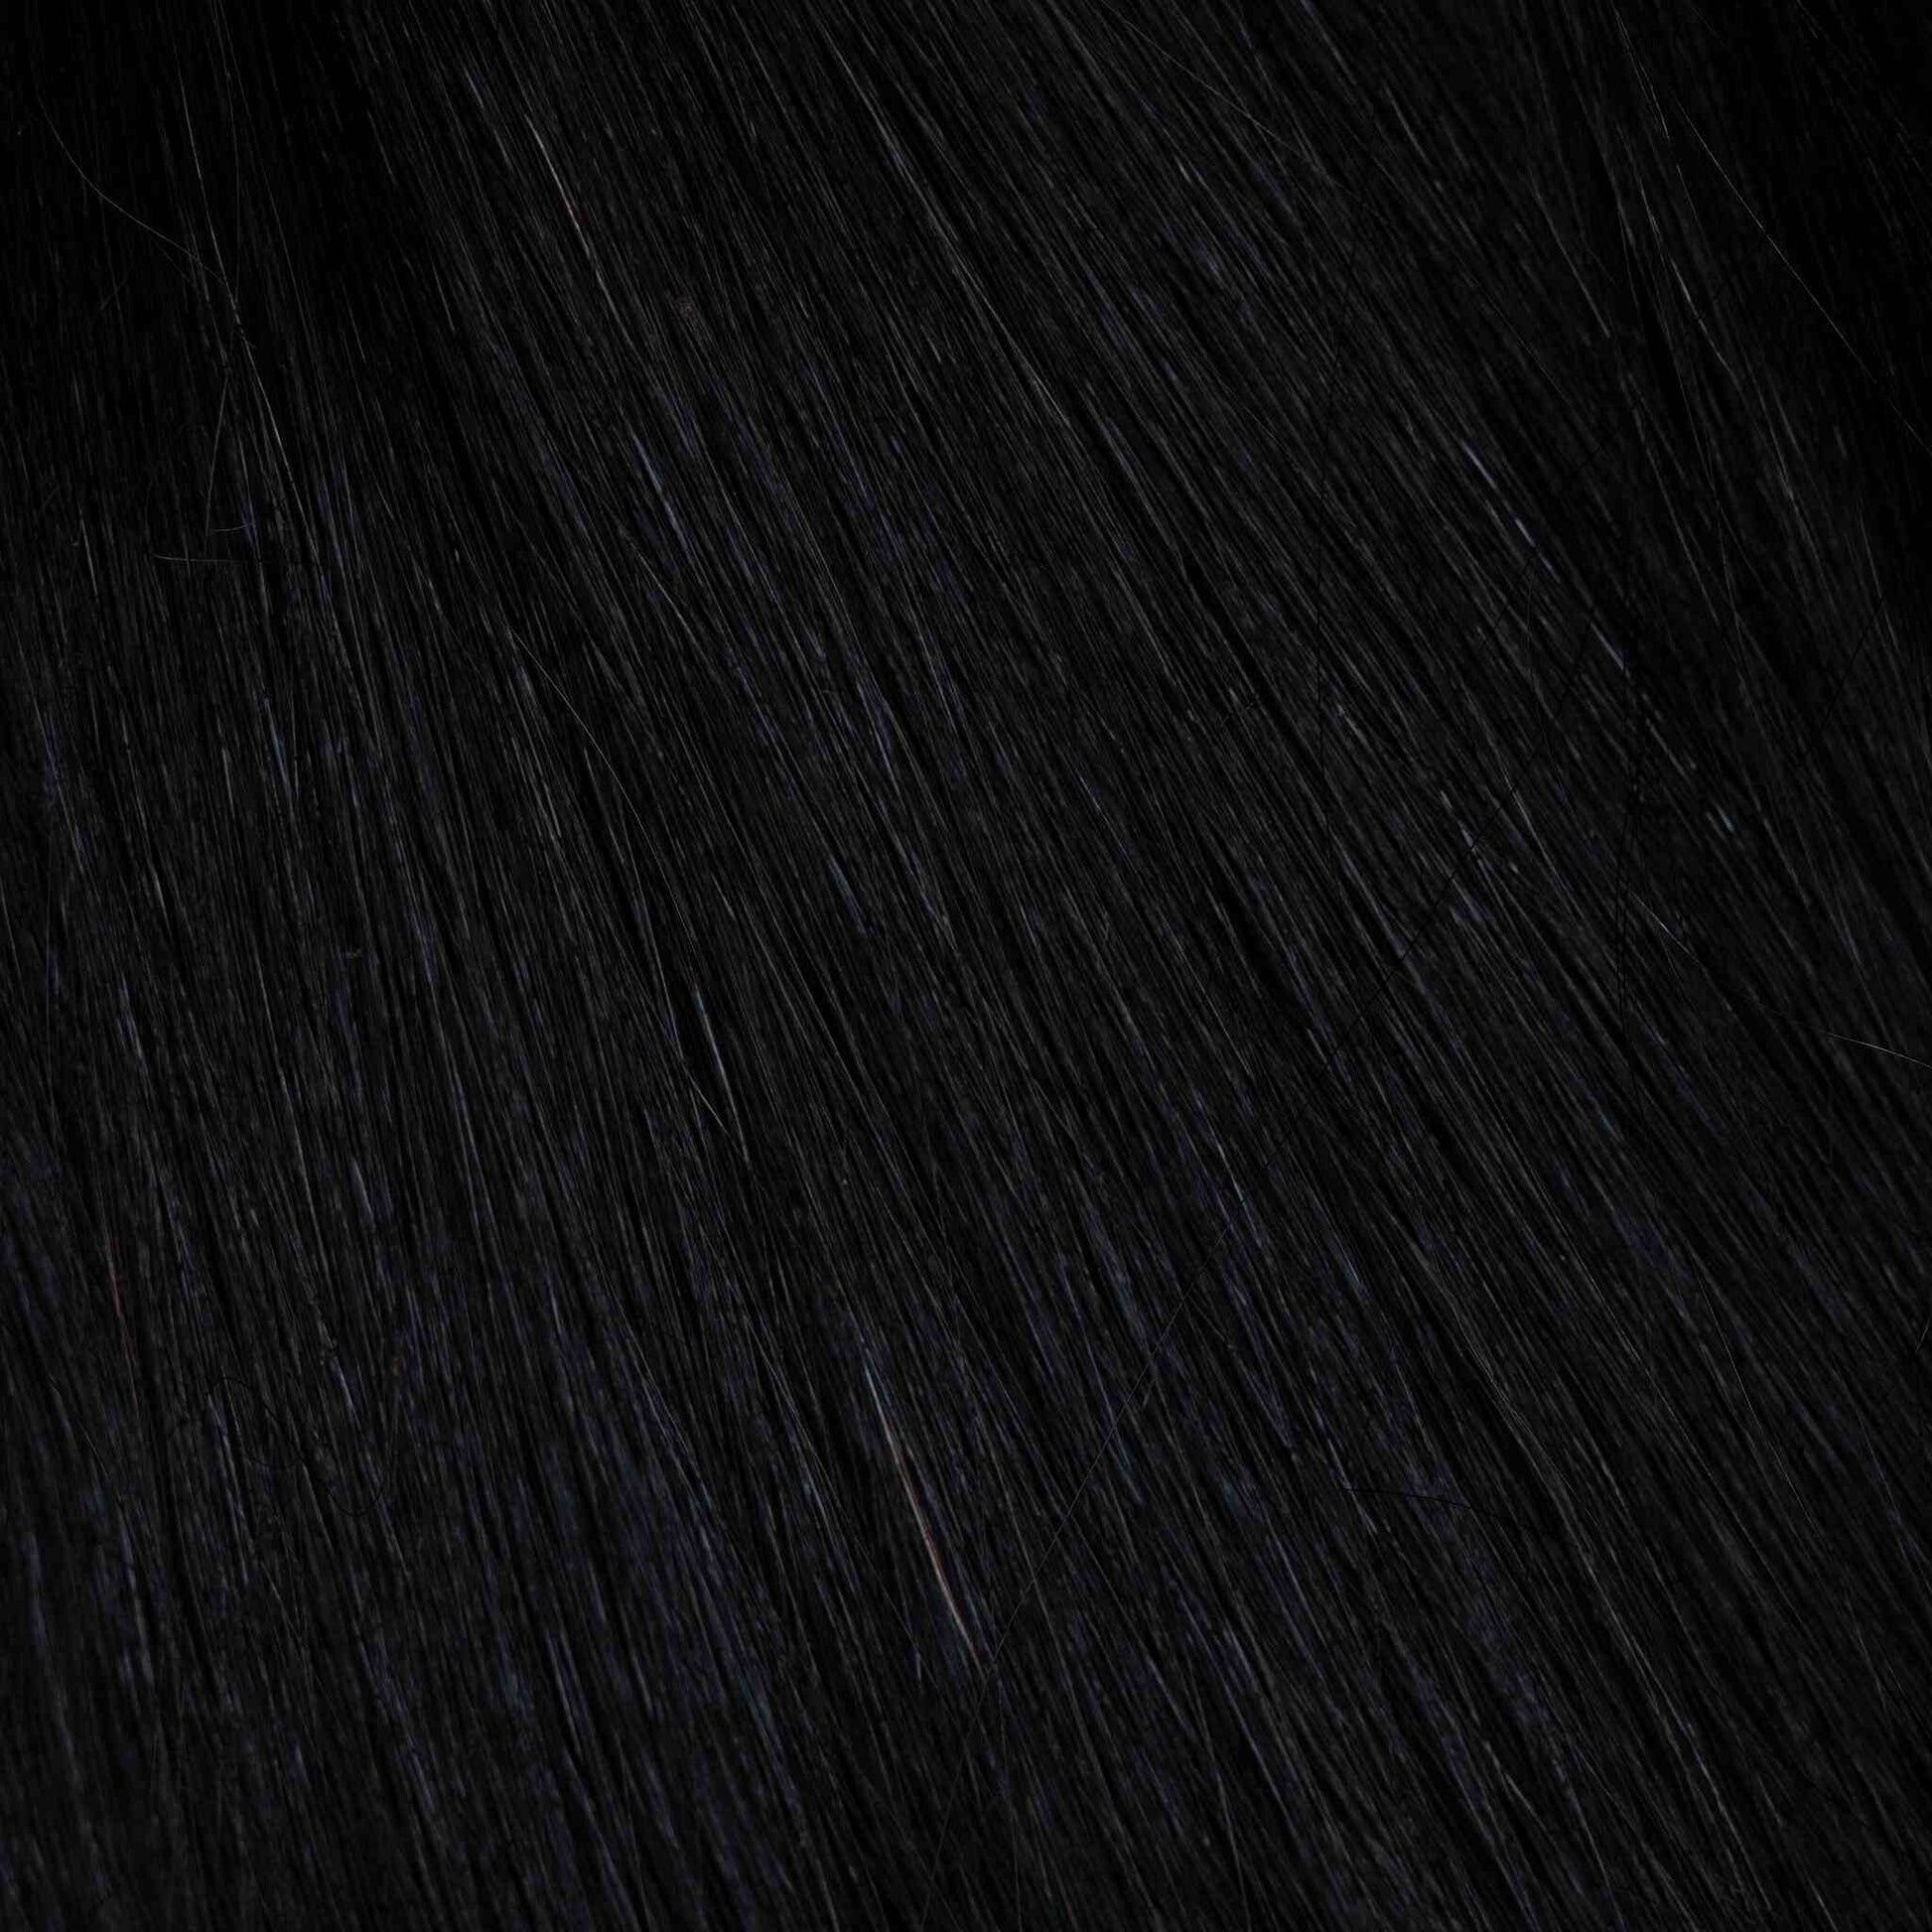 I-Tip 20" 25g Professional Hair Extensions - Jet Black #1